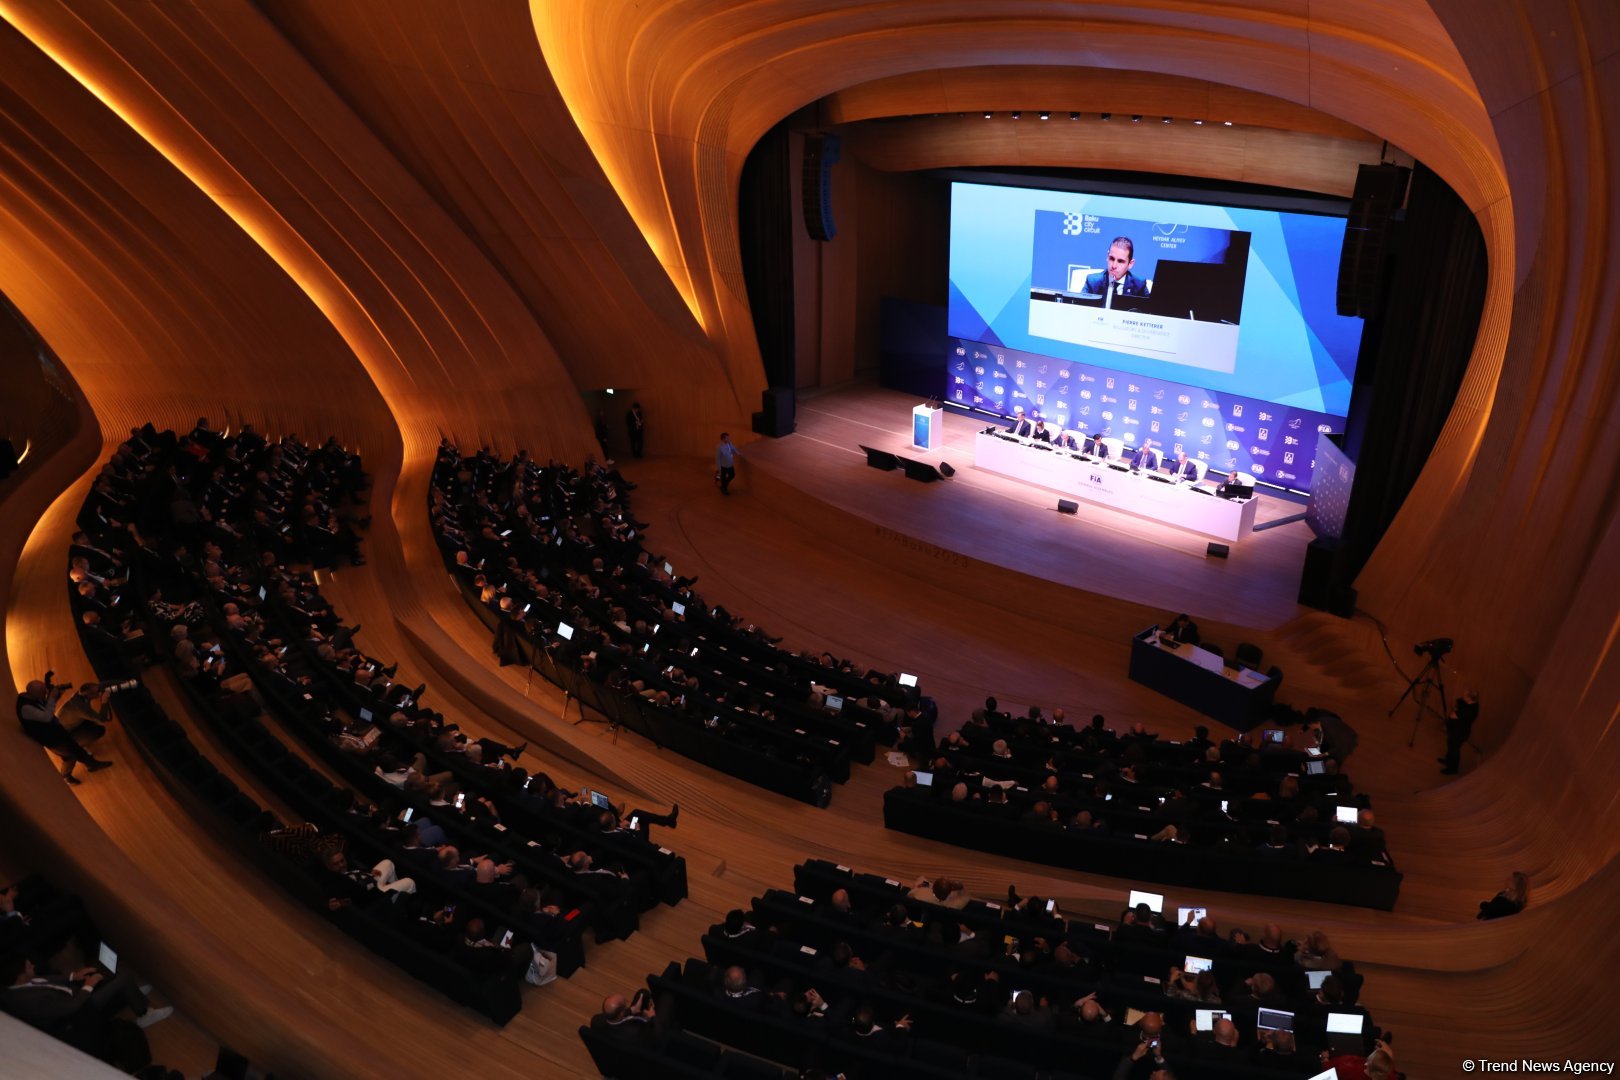 Baku holds FIA General Assembly final meeting (PHOTO)